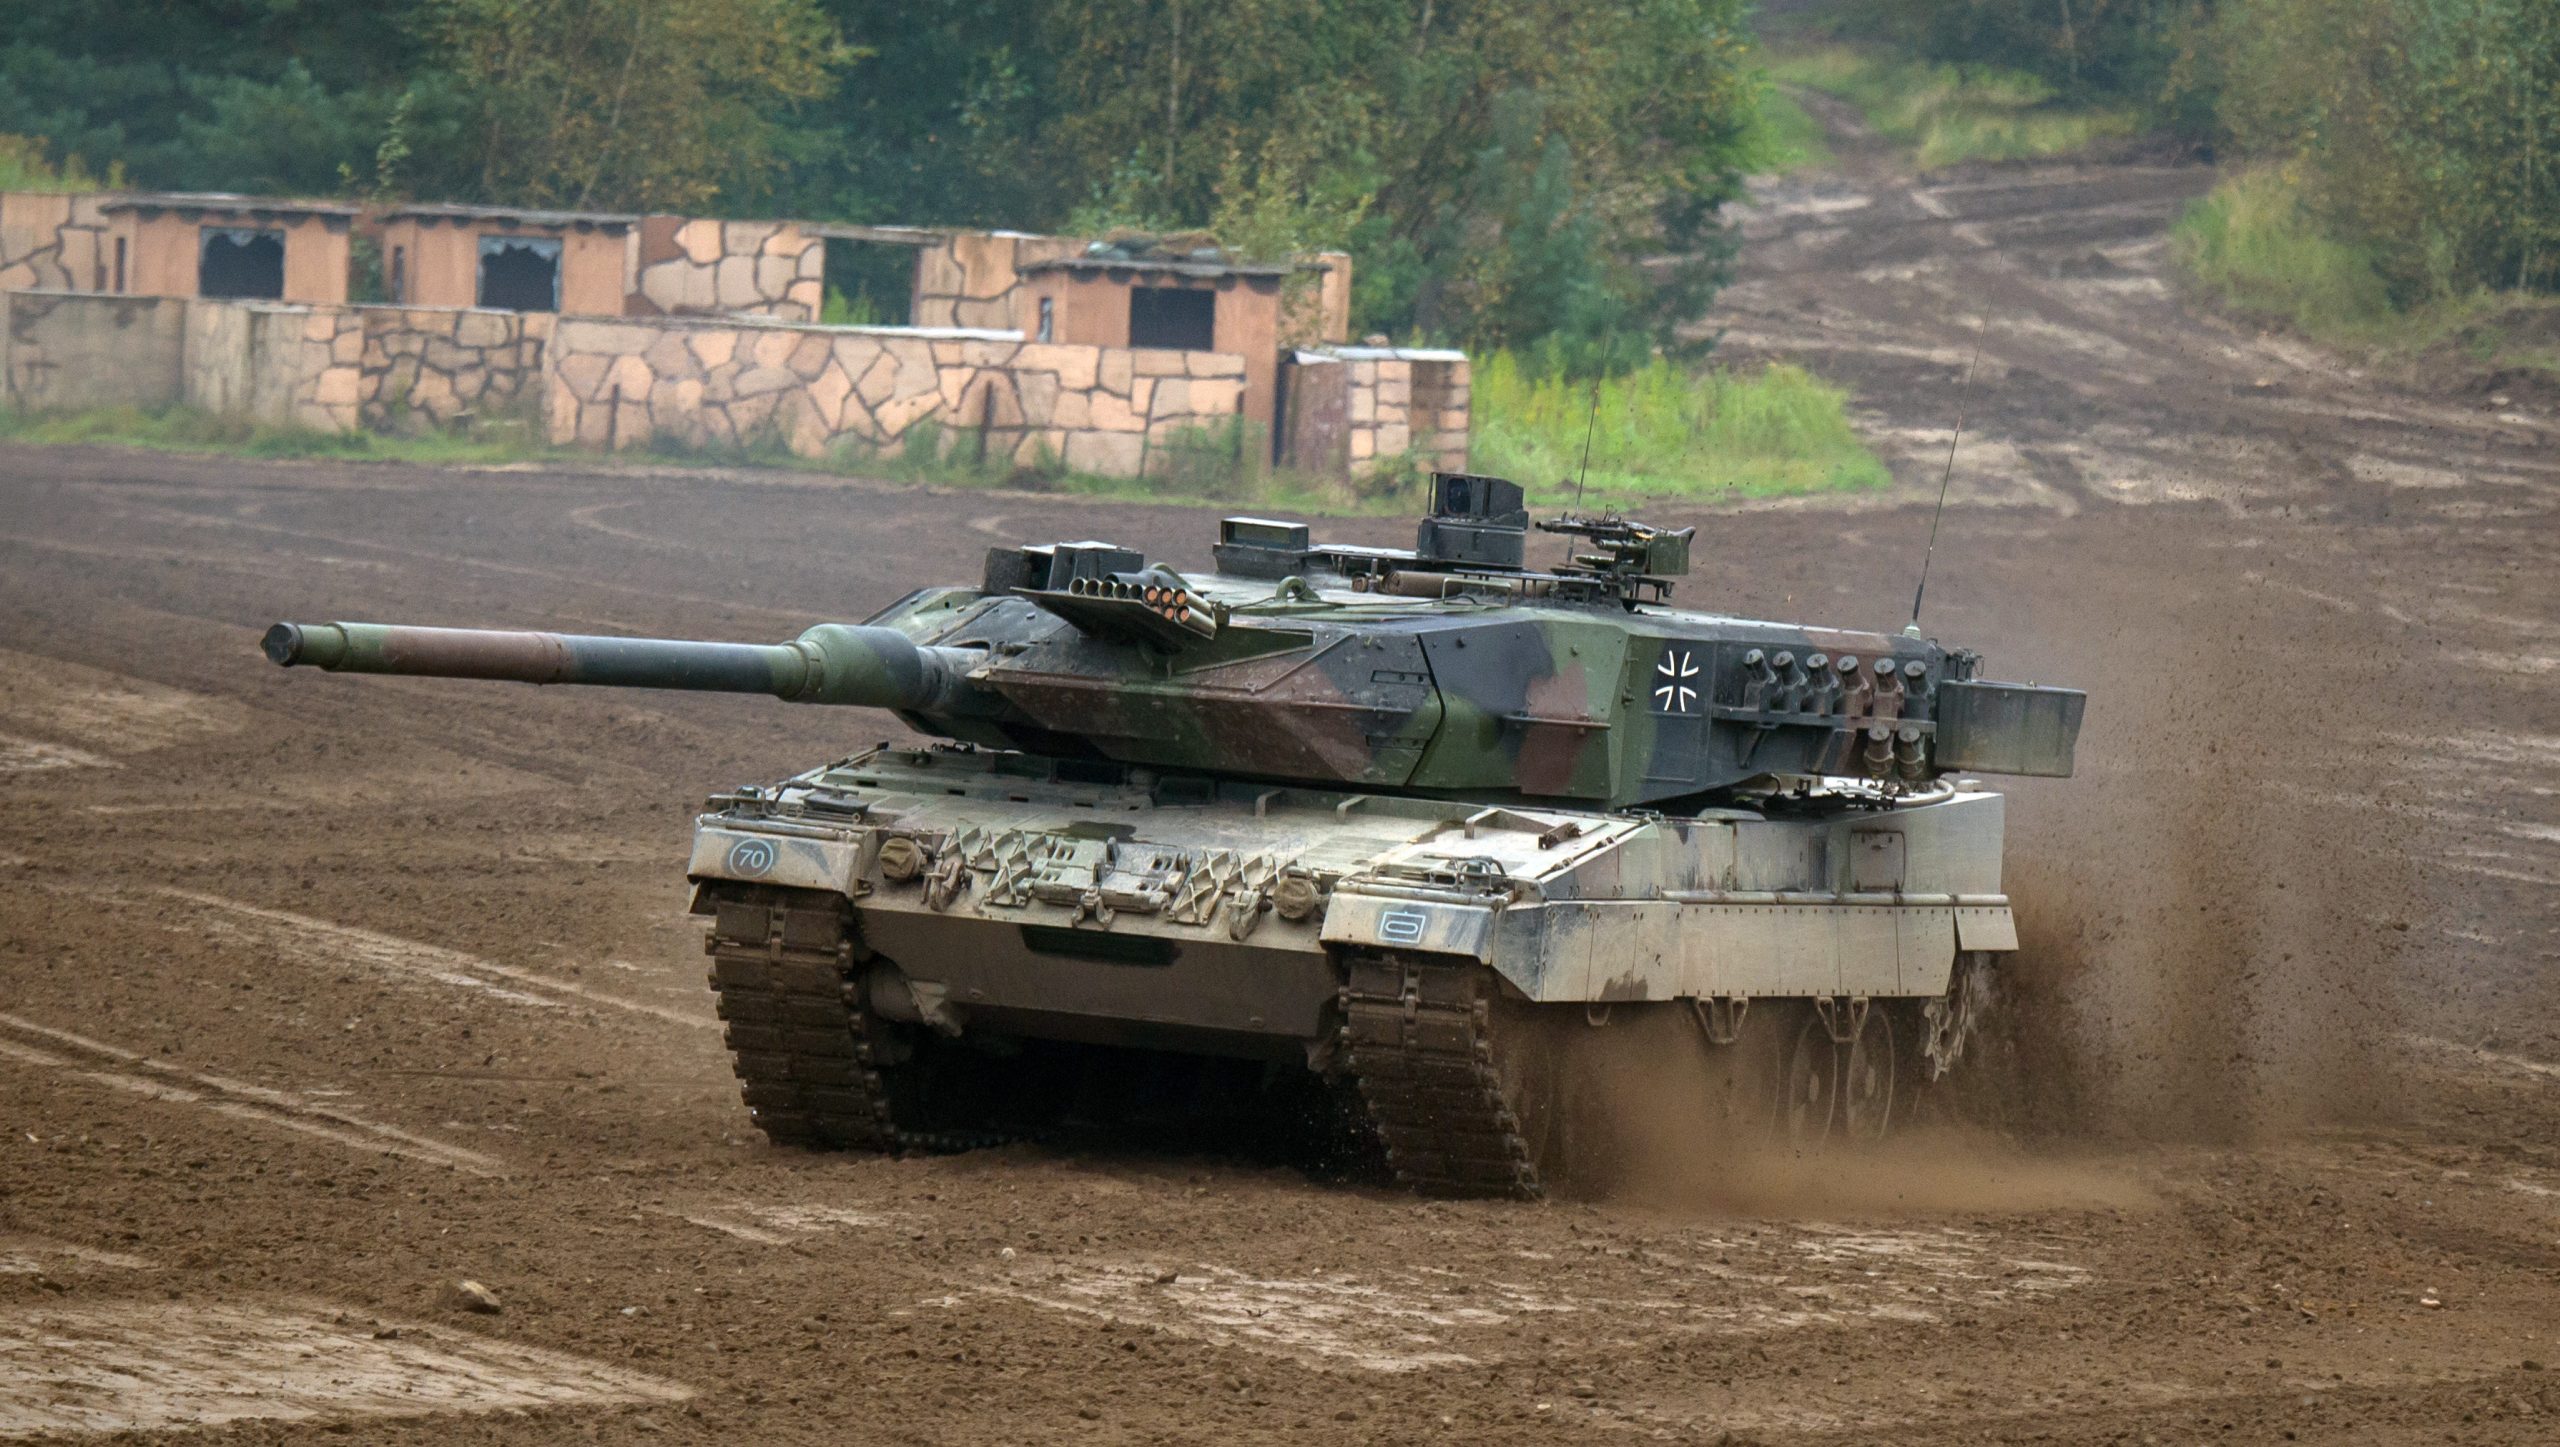 Leopard tanks like a Mercedes, says Ukrainian soldier training in